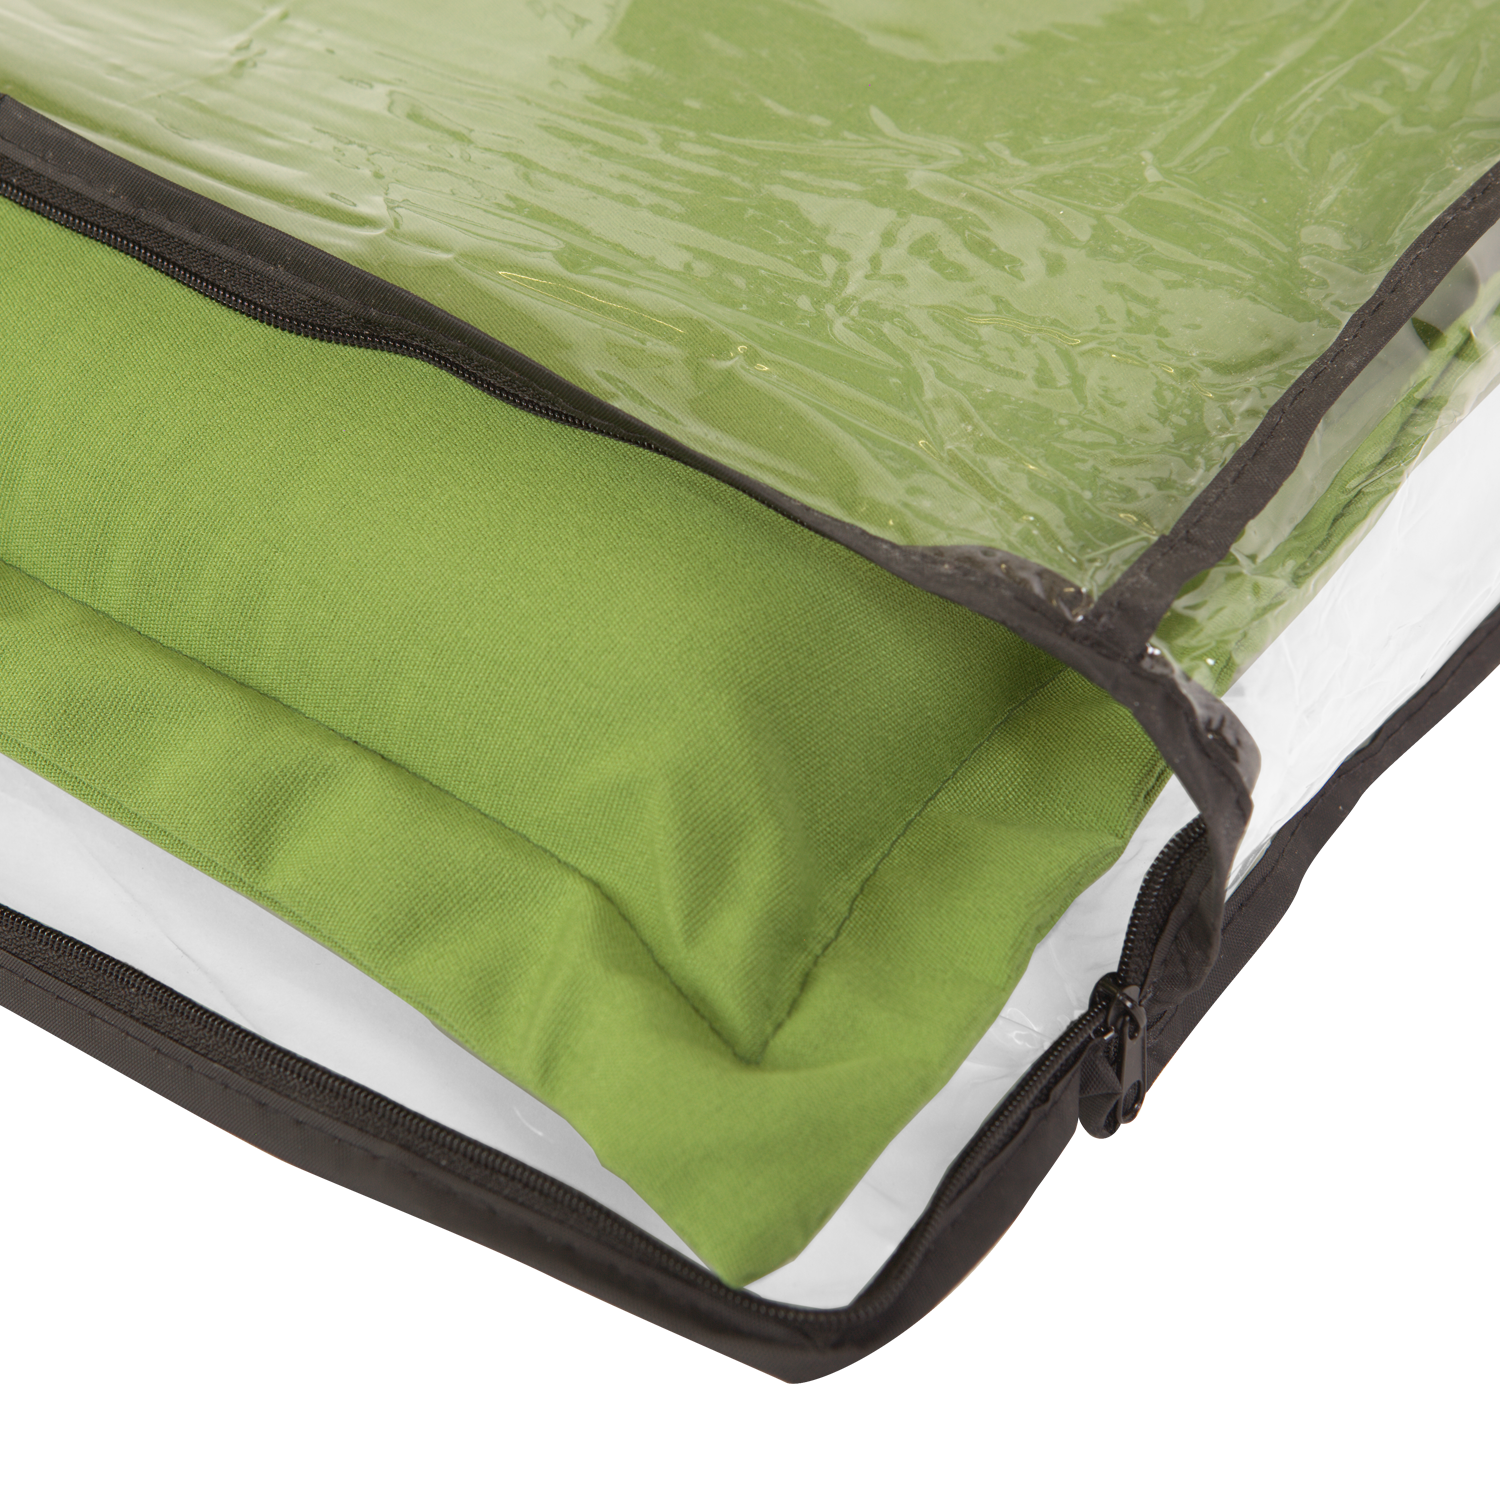 Kopu® Prisma Office Green - Extra Comfortabel Ligbedkussen 195x60 cm